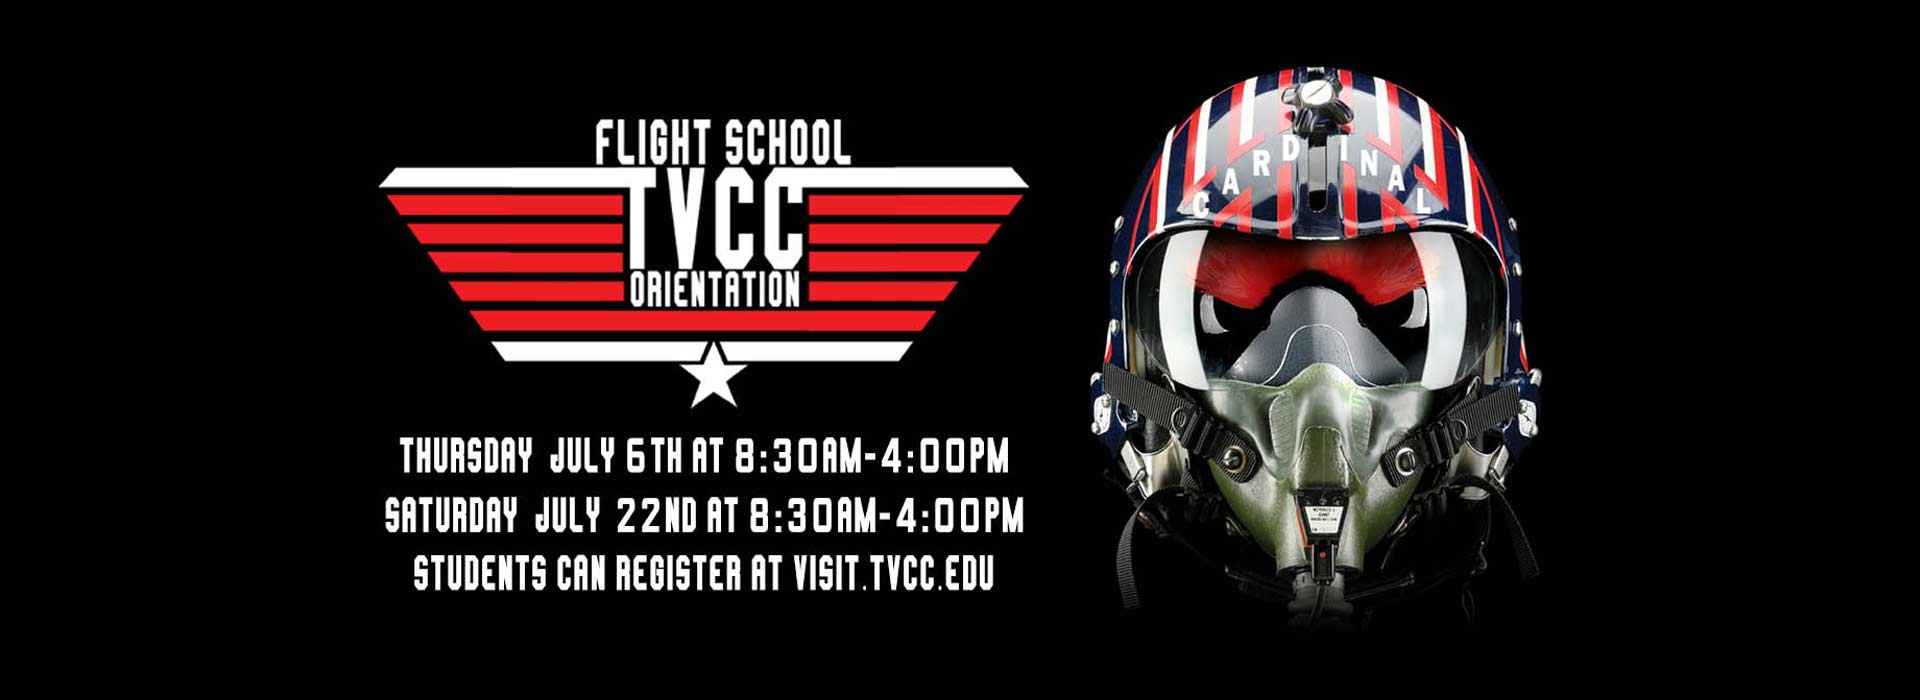 Flight School - TVCC - Orientation. Thursday, July 6th, 8:30am-4pm. Saturday, July 22nd, 8:30am-4pm.